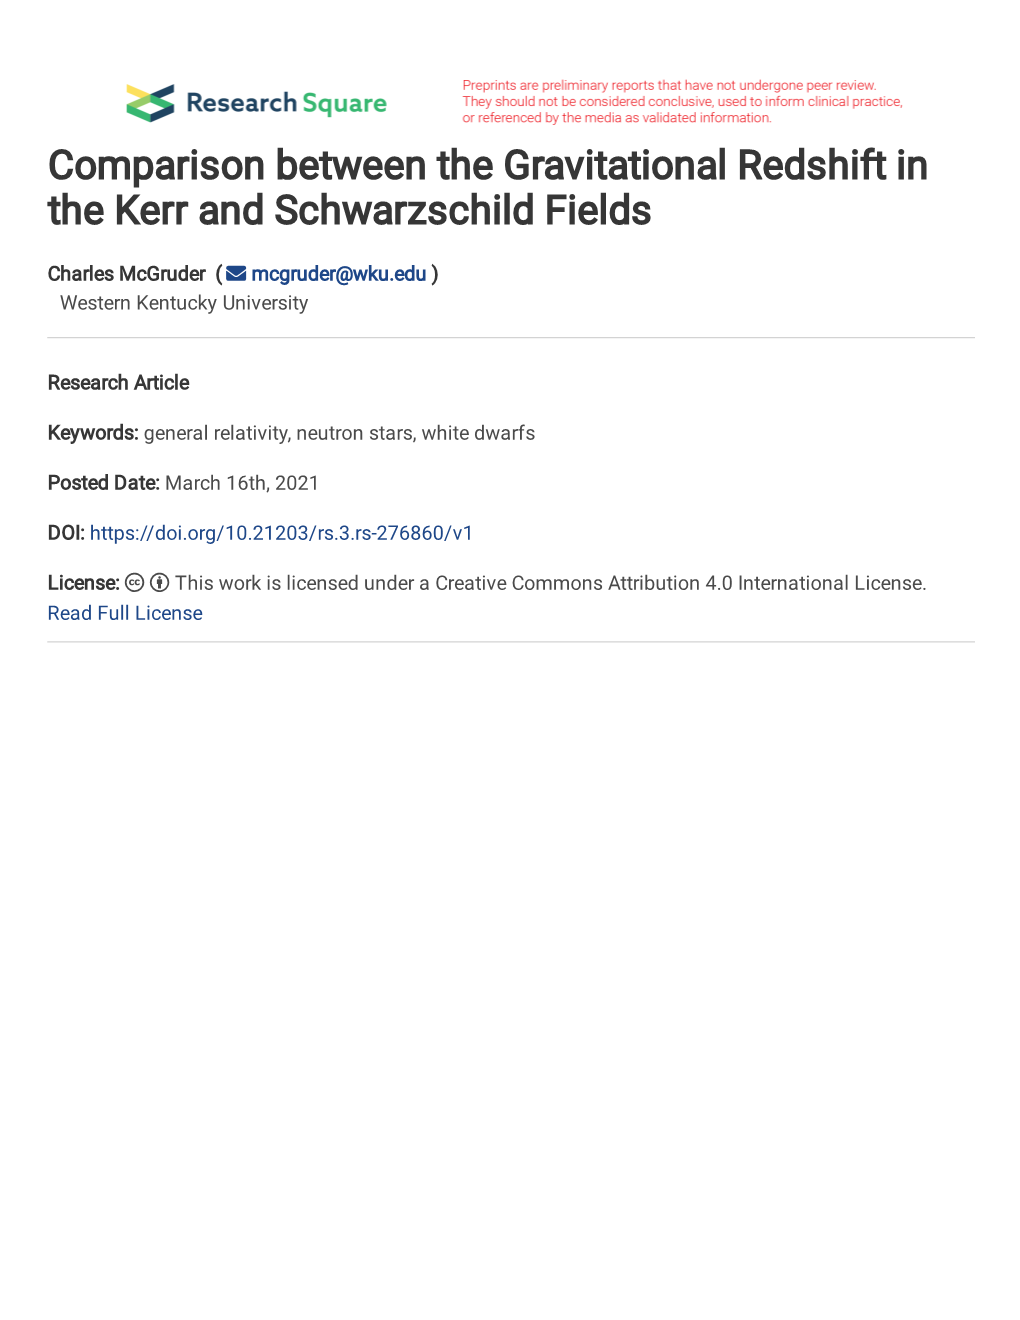 Comparison Between the Gravitational Redshift in the Kerr and Schwarzschild Fields